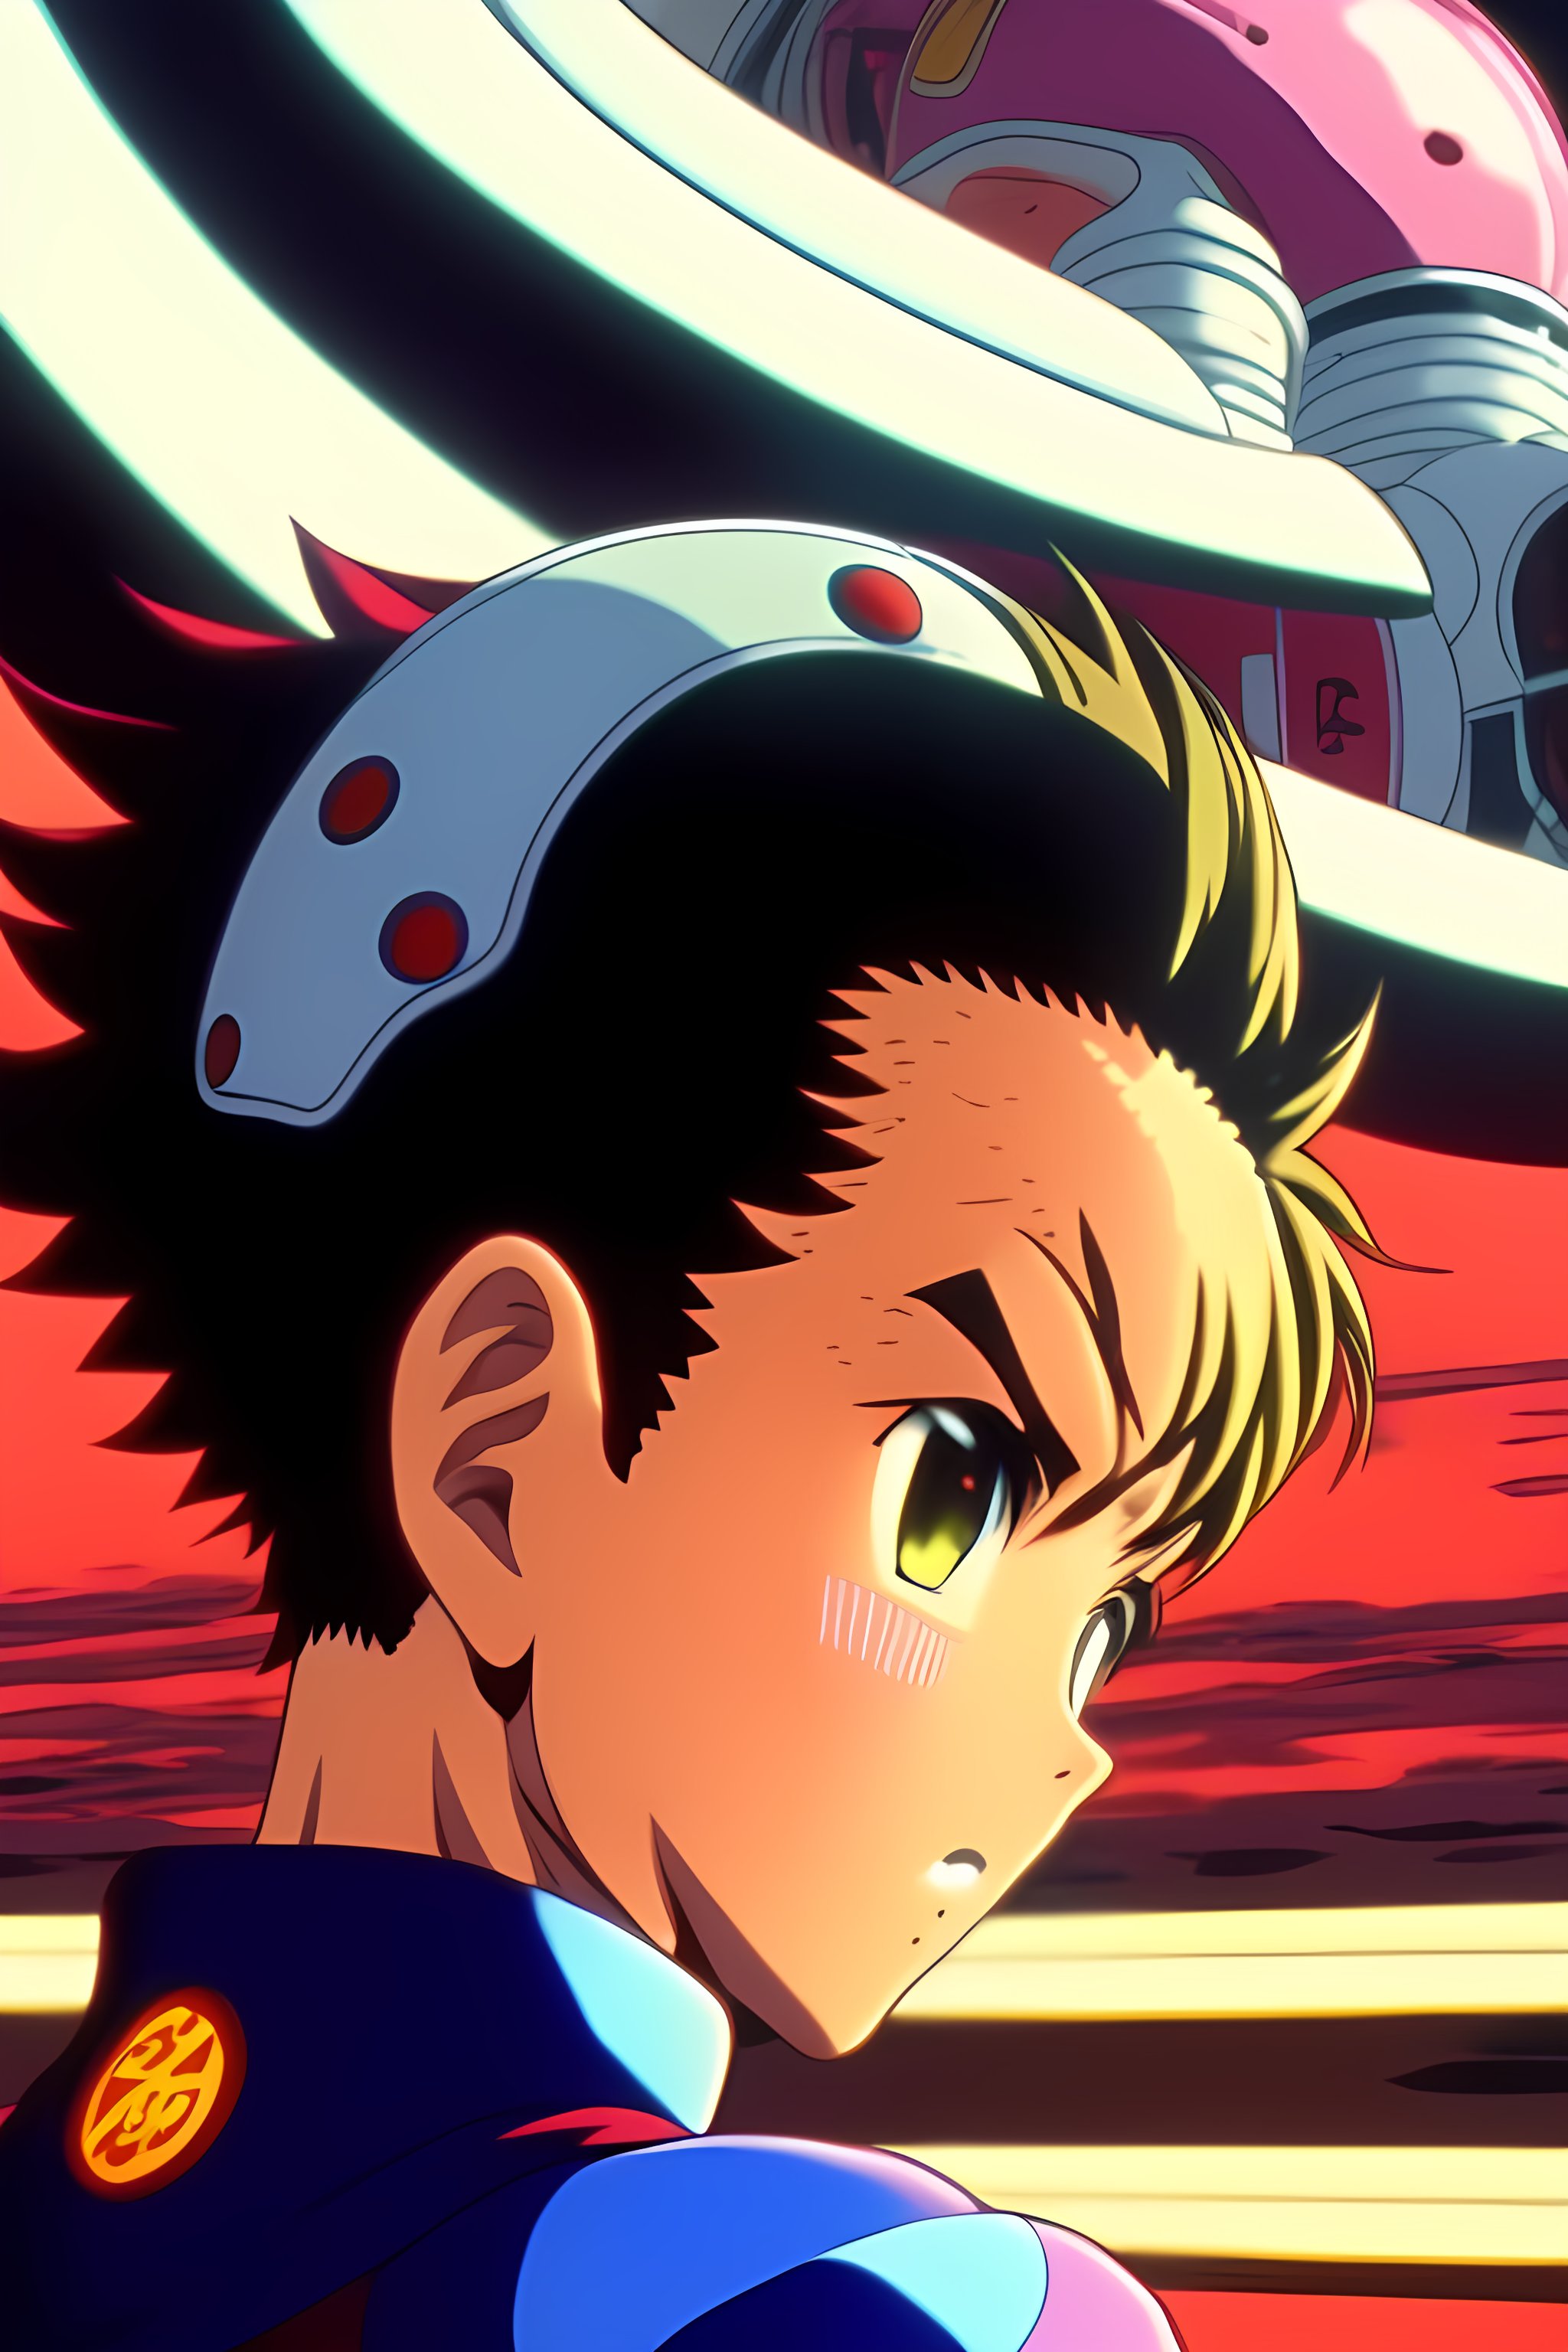 Pin by Akira on 91 days  Anime fanart, Anime, Aesthetic anime